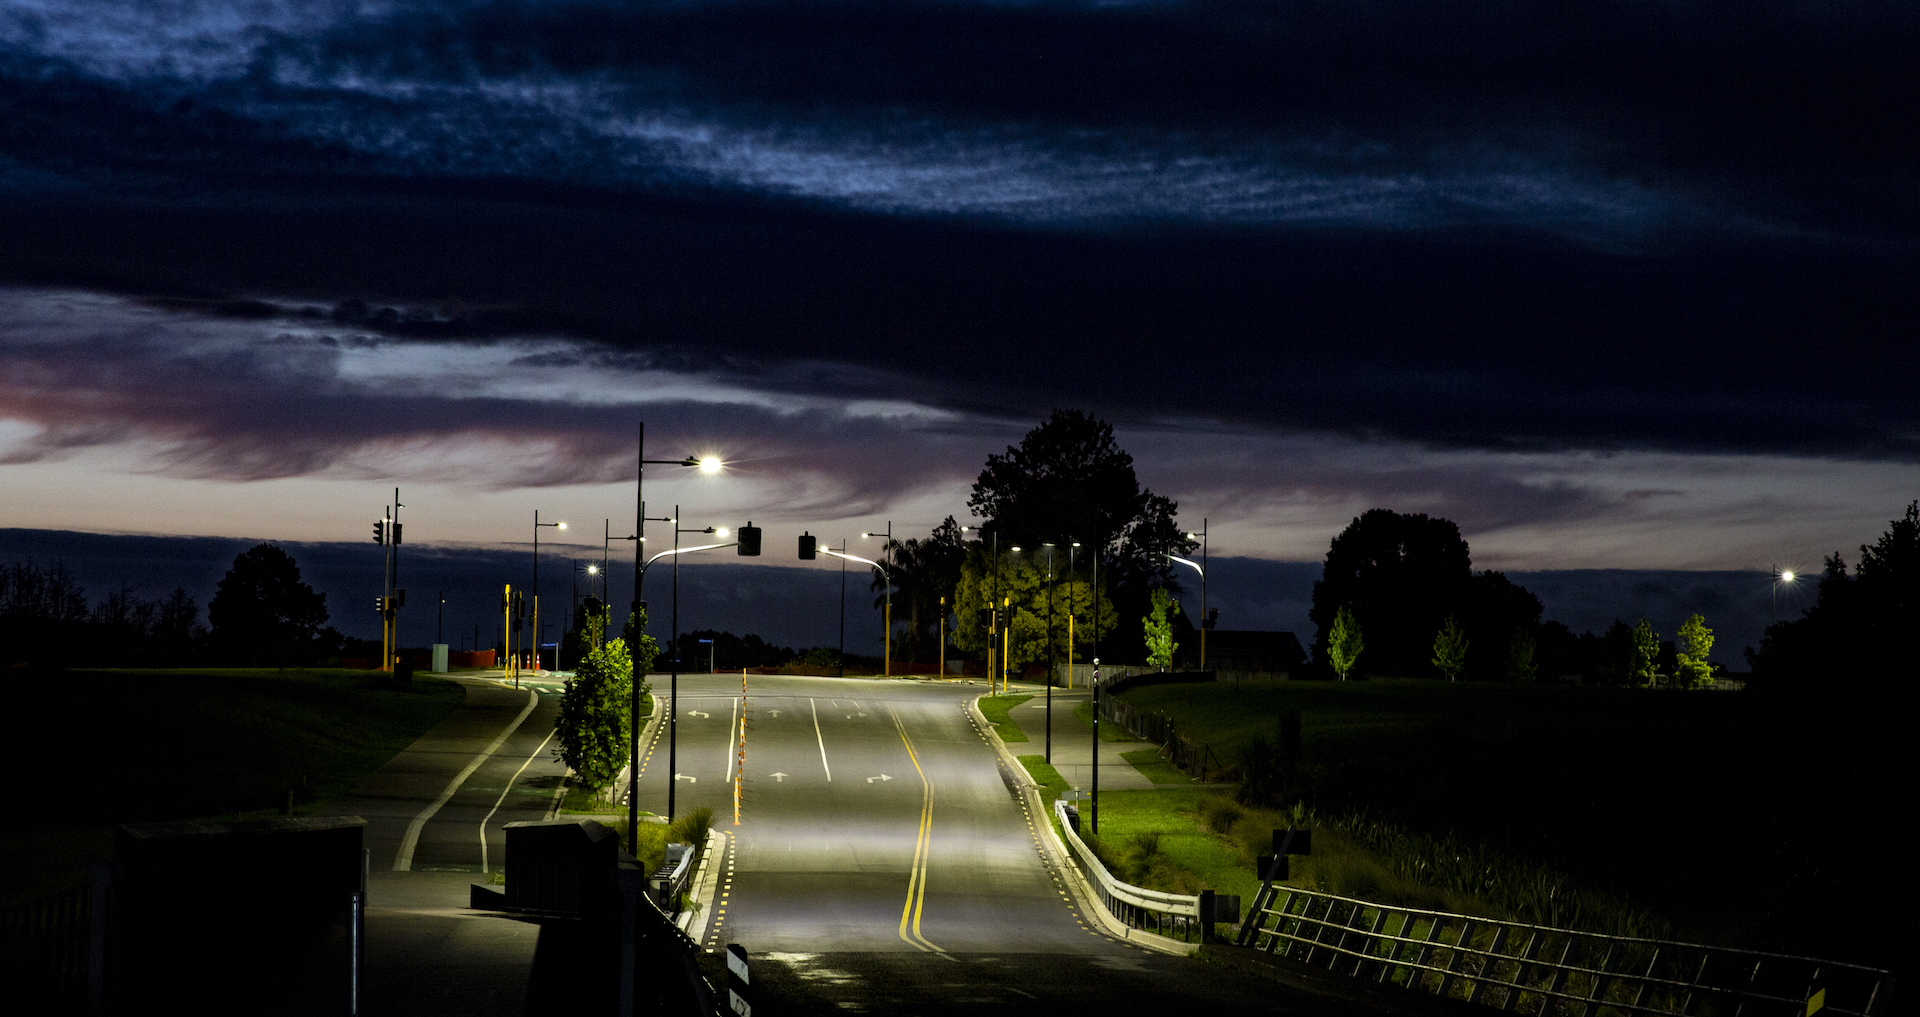 Auranga tree-lined street by night, presenting Ibex Lighting's lighting solution.